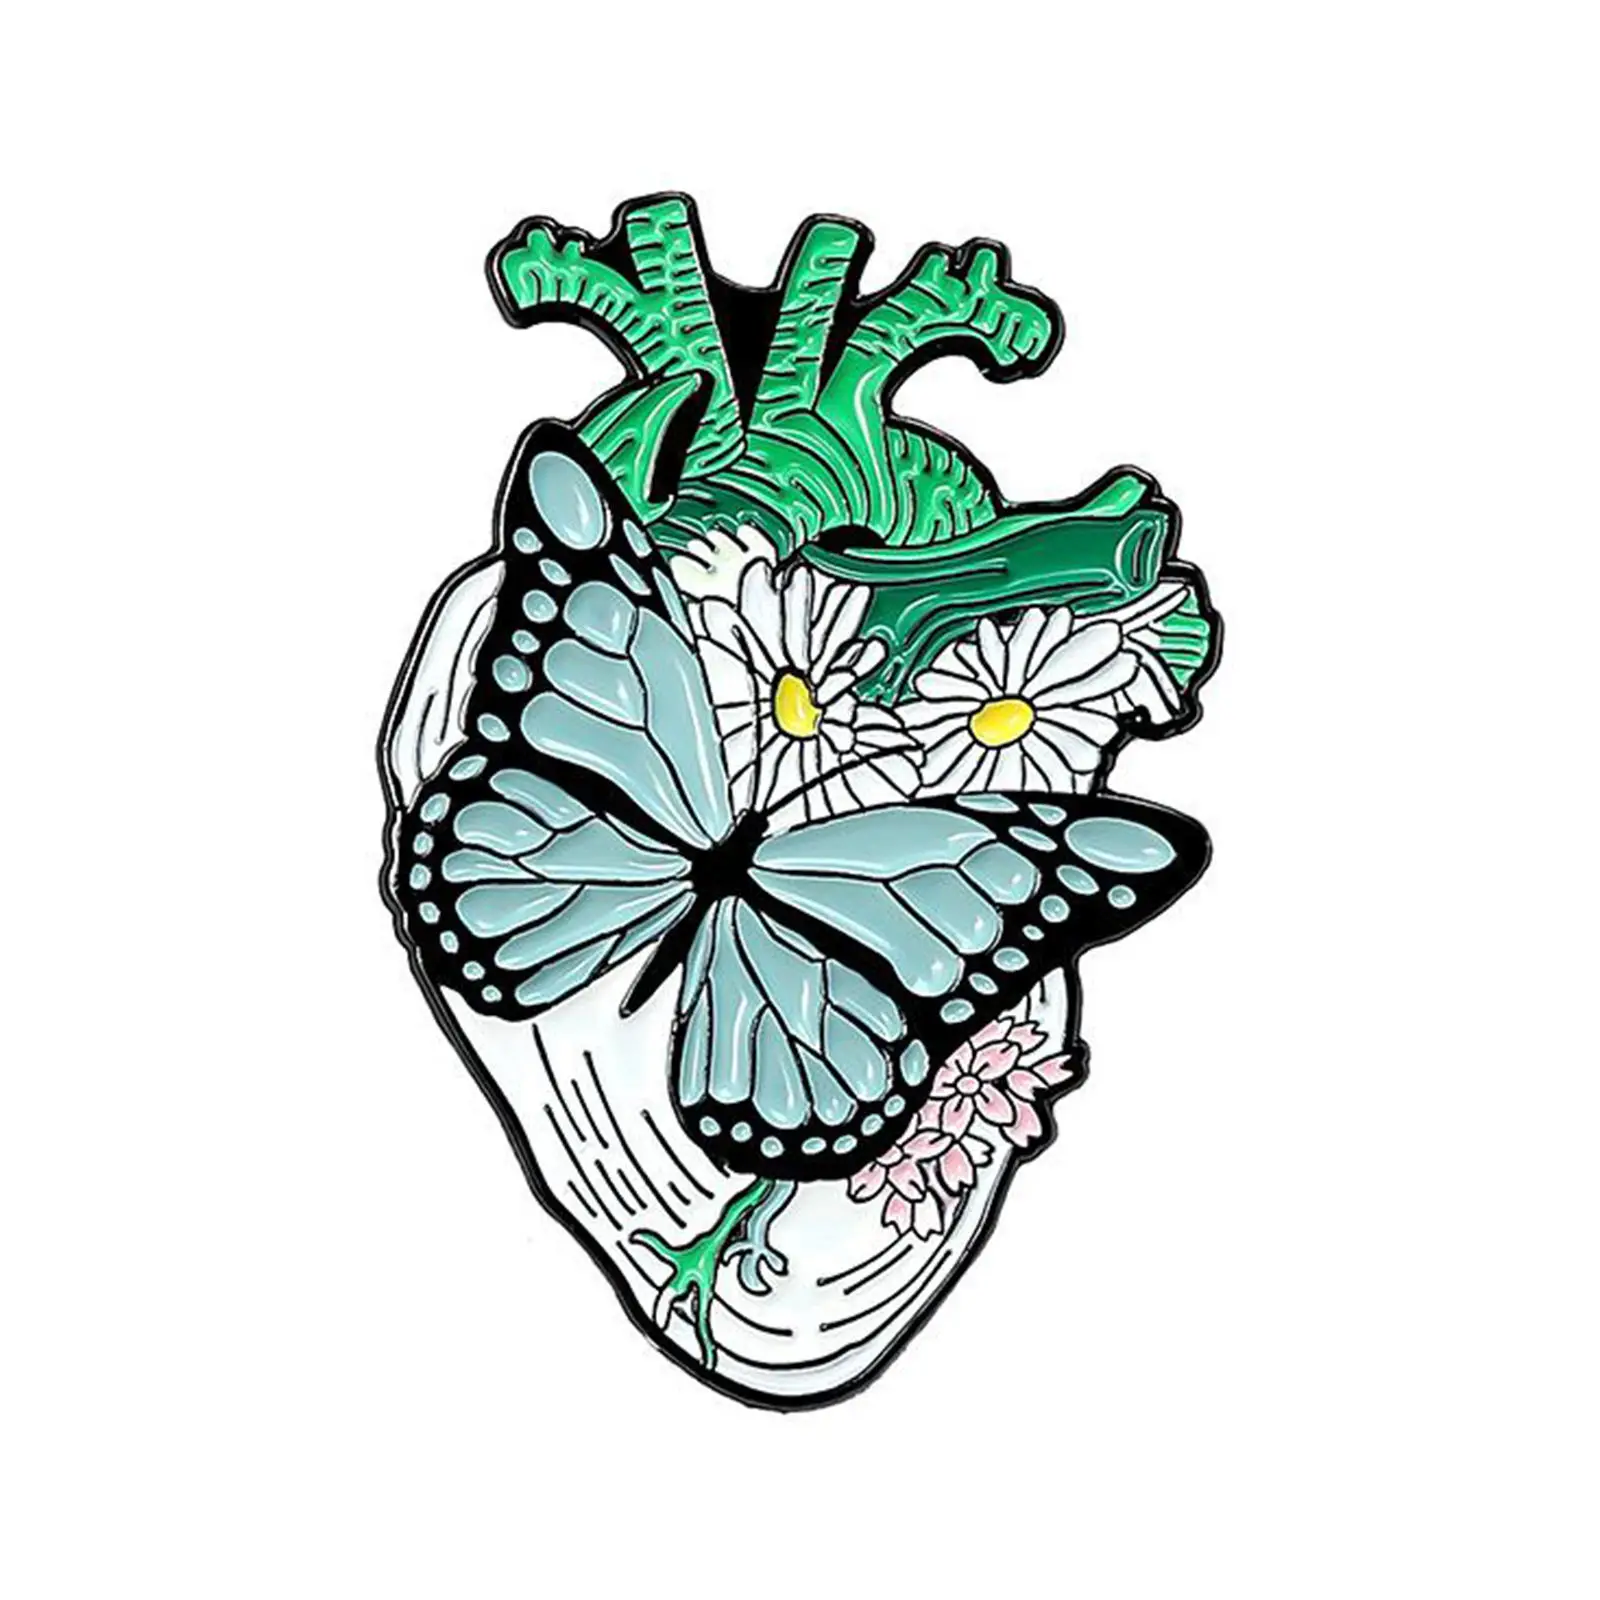 Pack of 5 Organ Heart Enamel Pins Brooch Badge for Bag Clothes Lapel Pin